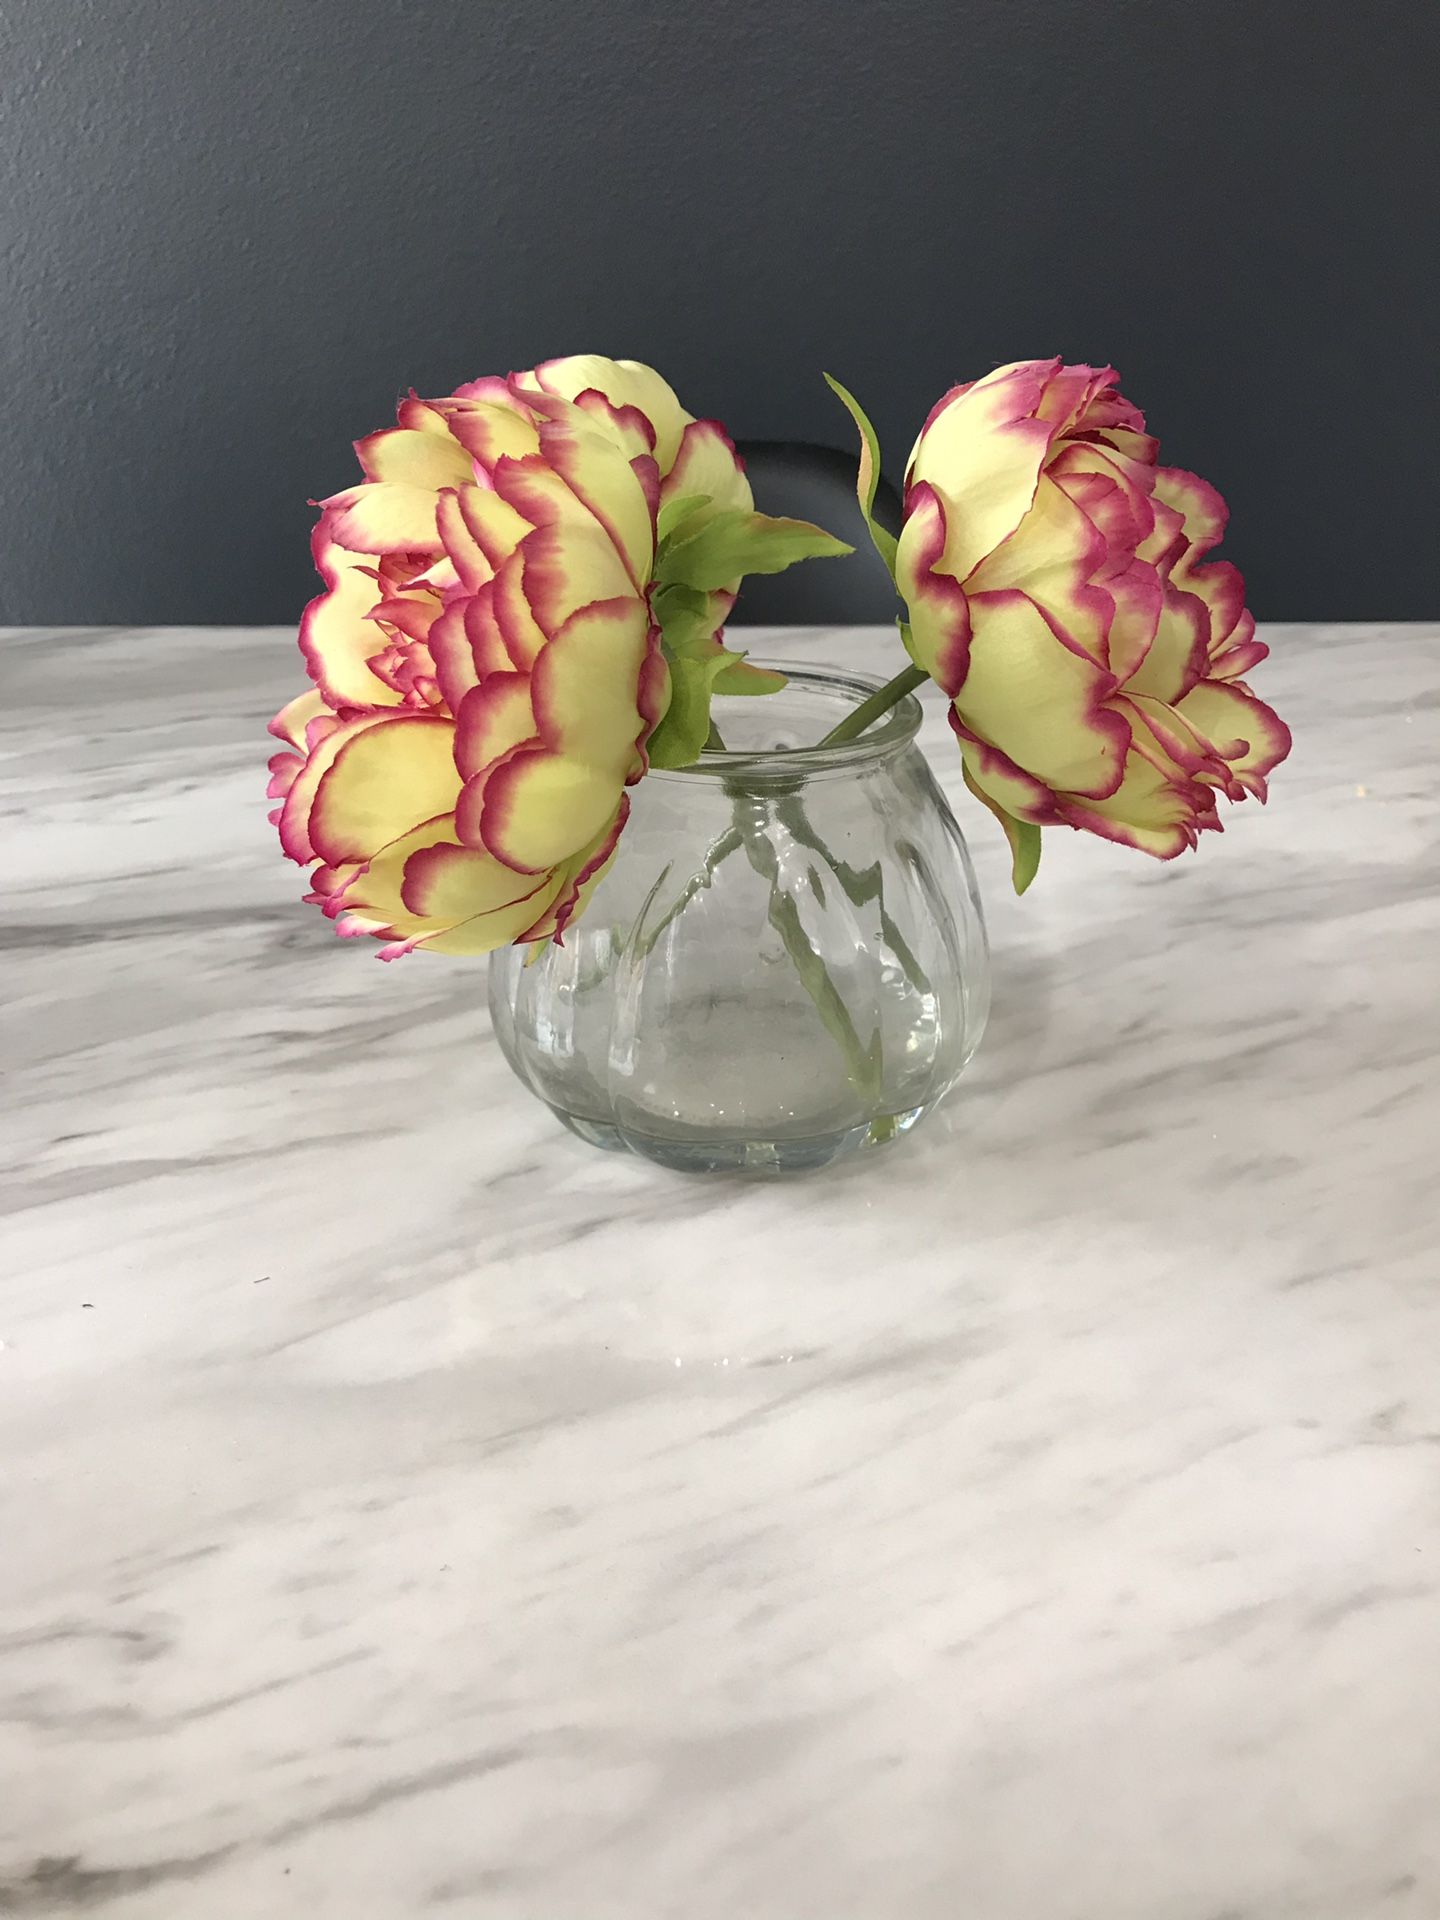 Decorative flowers and vase